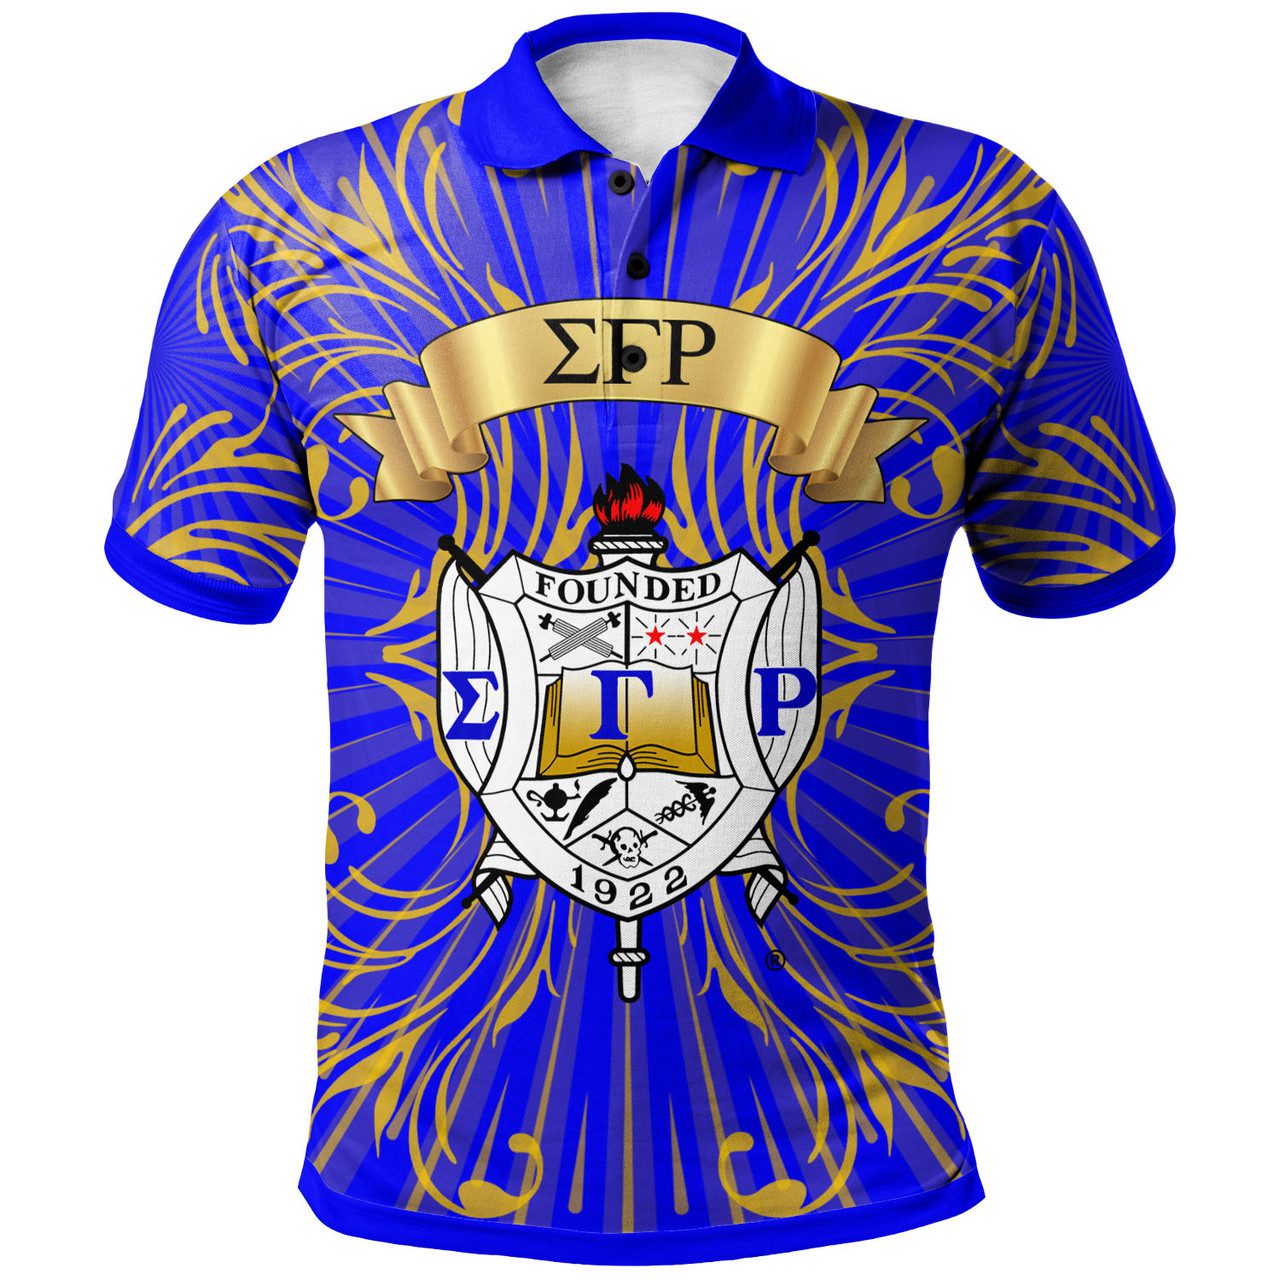 Sigma Gamma Rho Polo Shirt – Sorority Vintage Style Polo Shirt